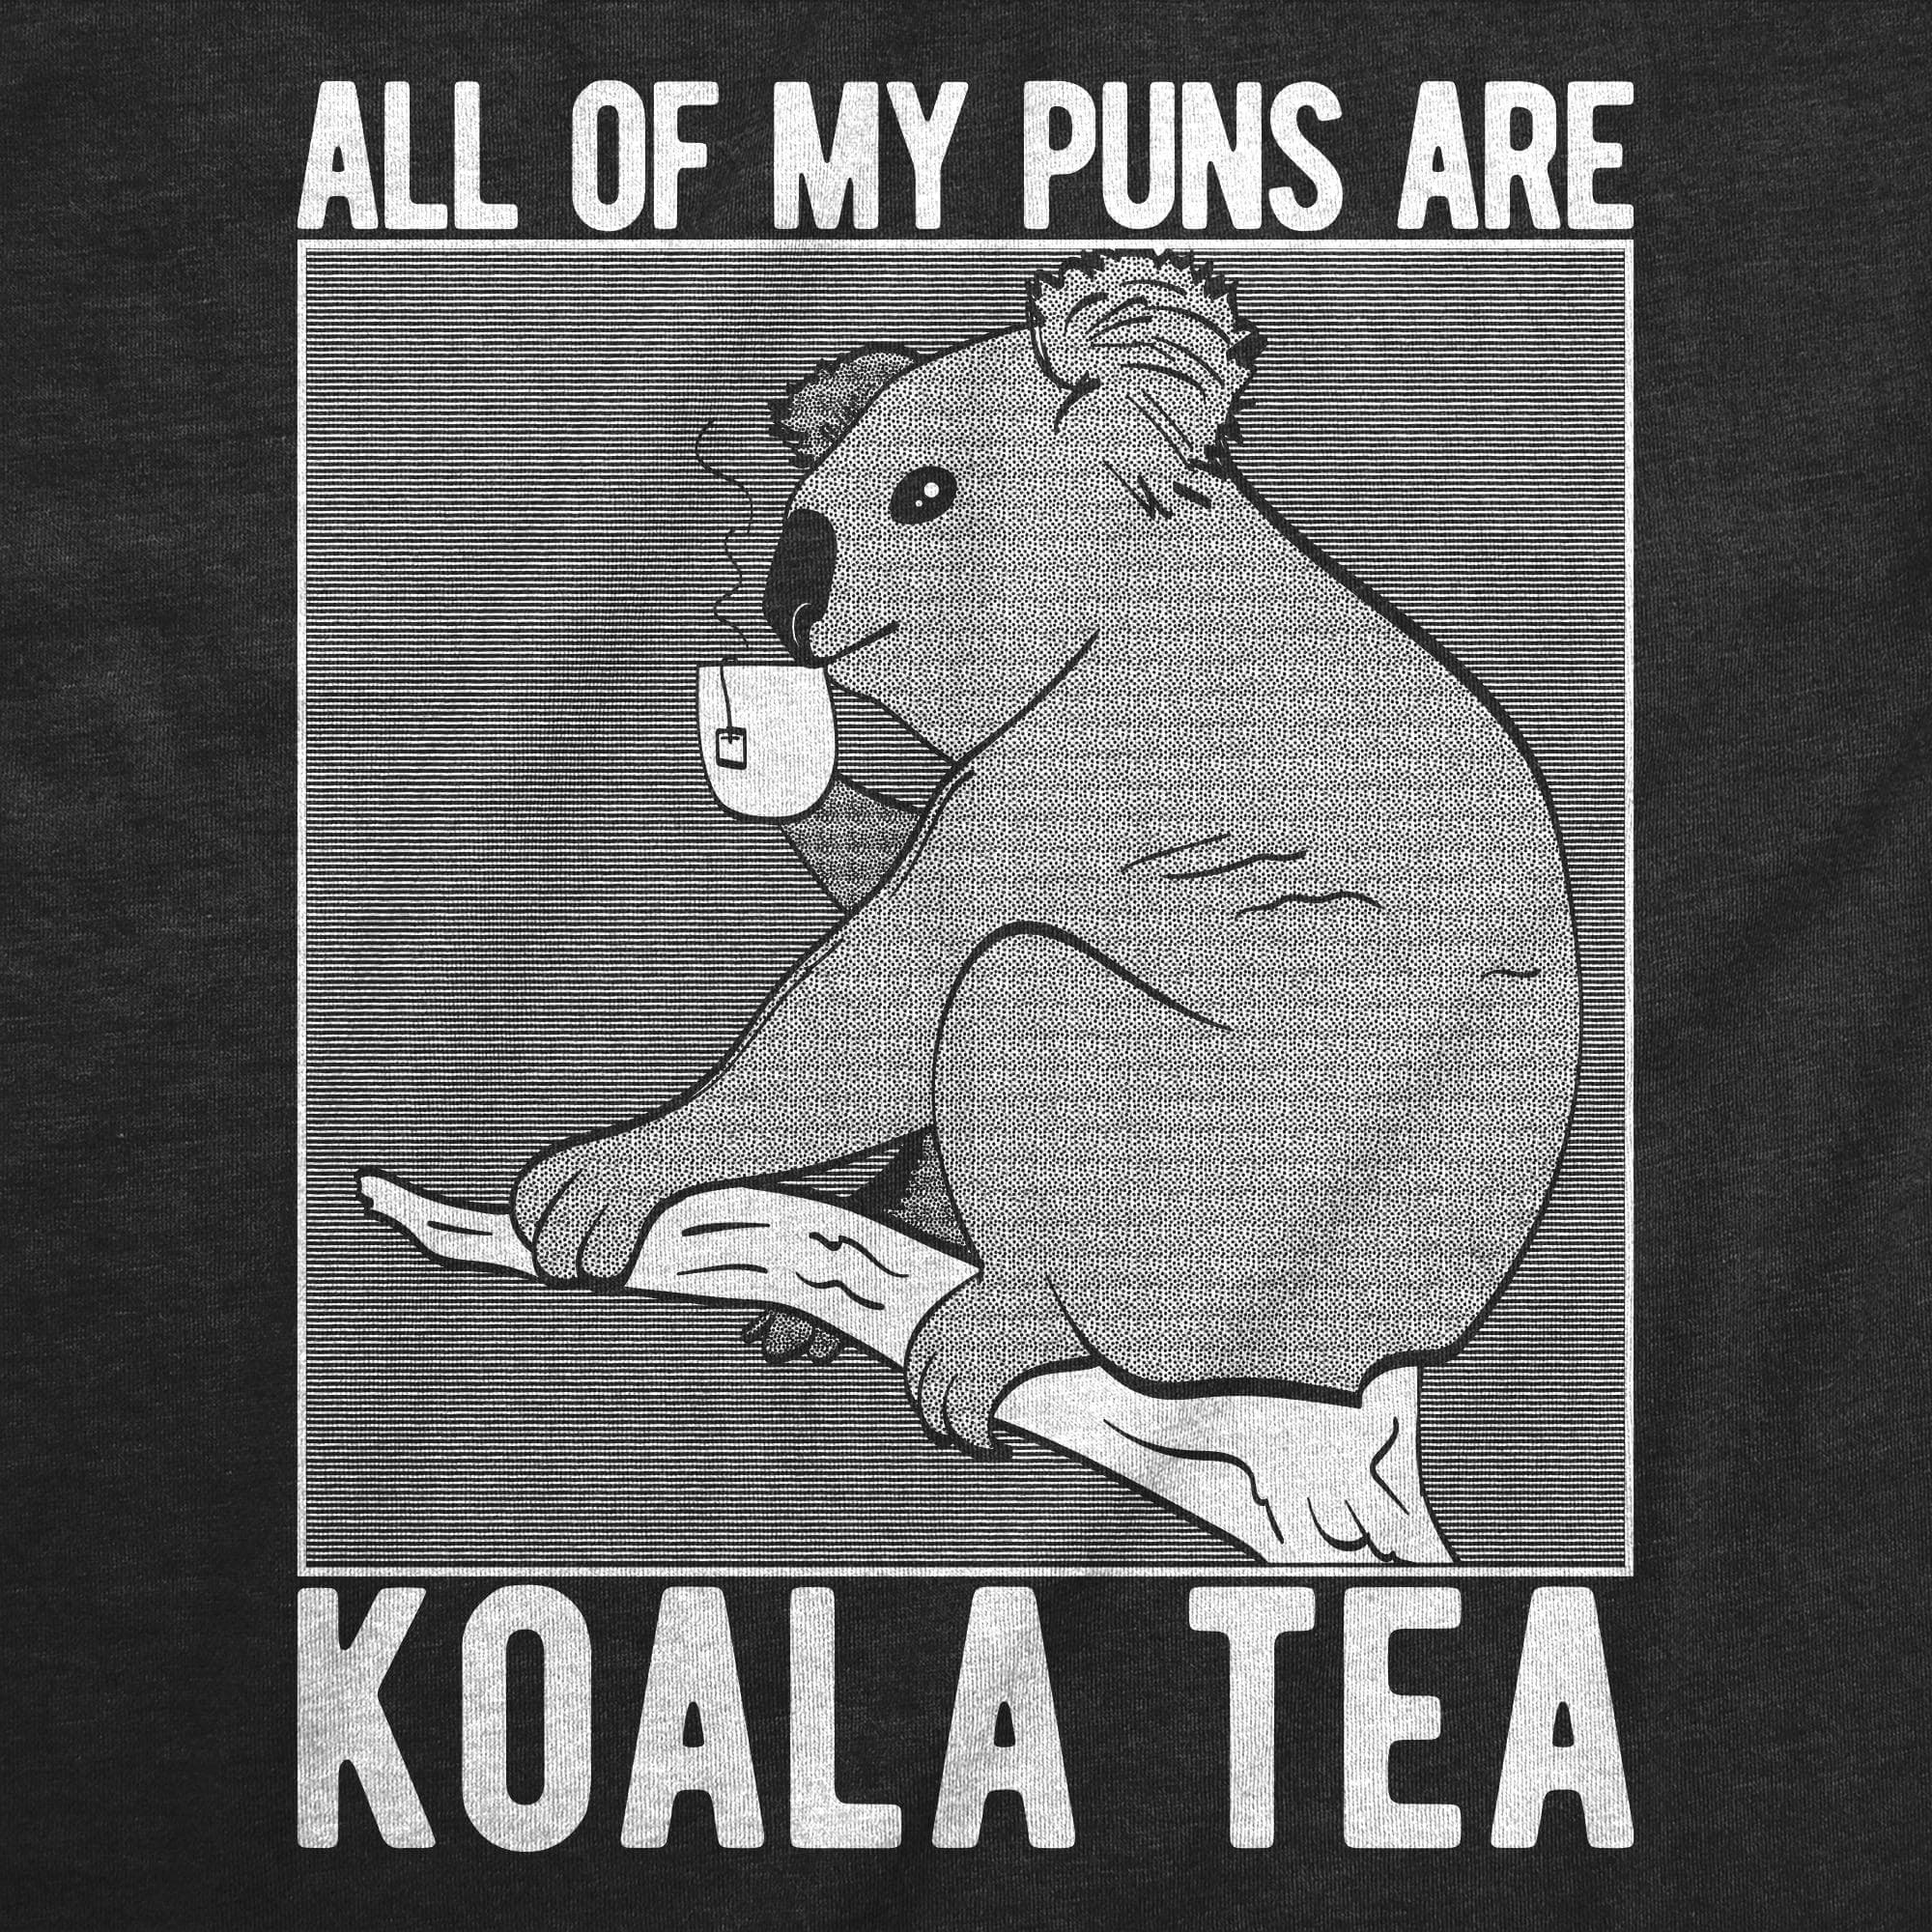 My Puns Are Koalaty Men's Tshirt - Crazy Dog T-Shirts